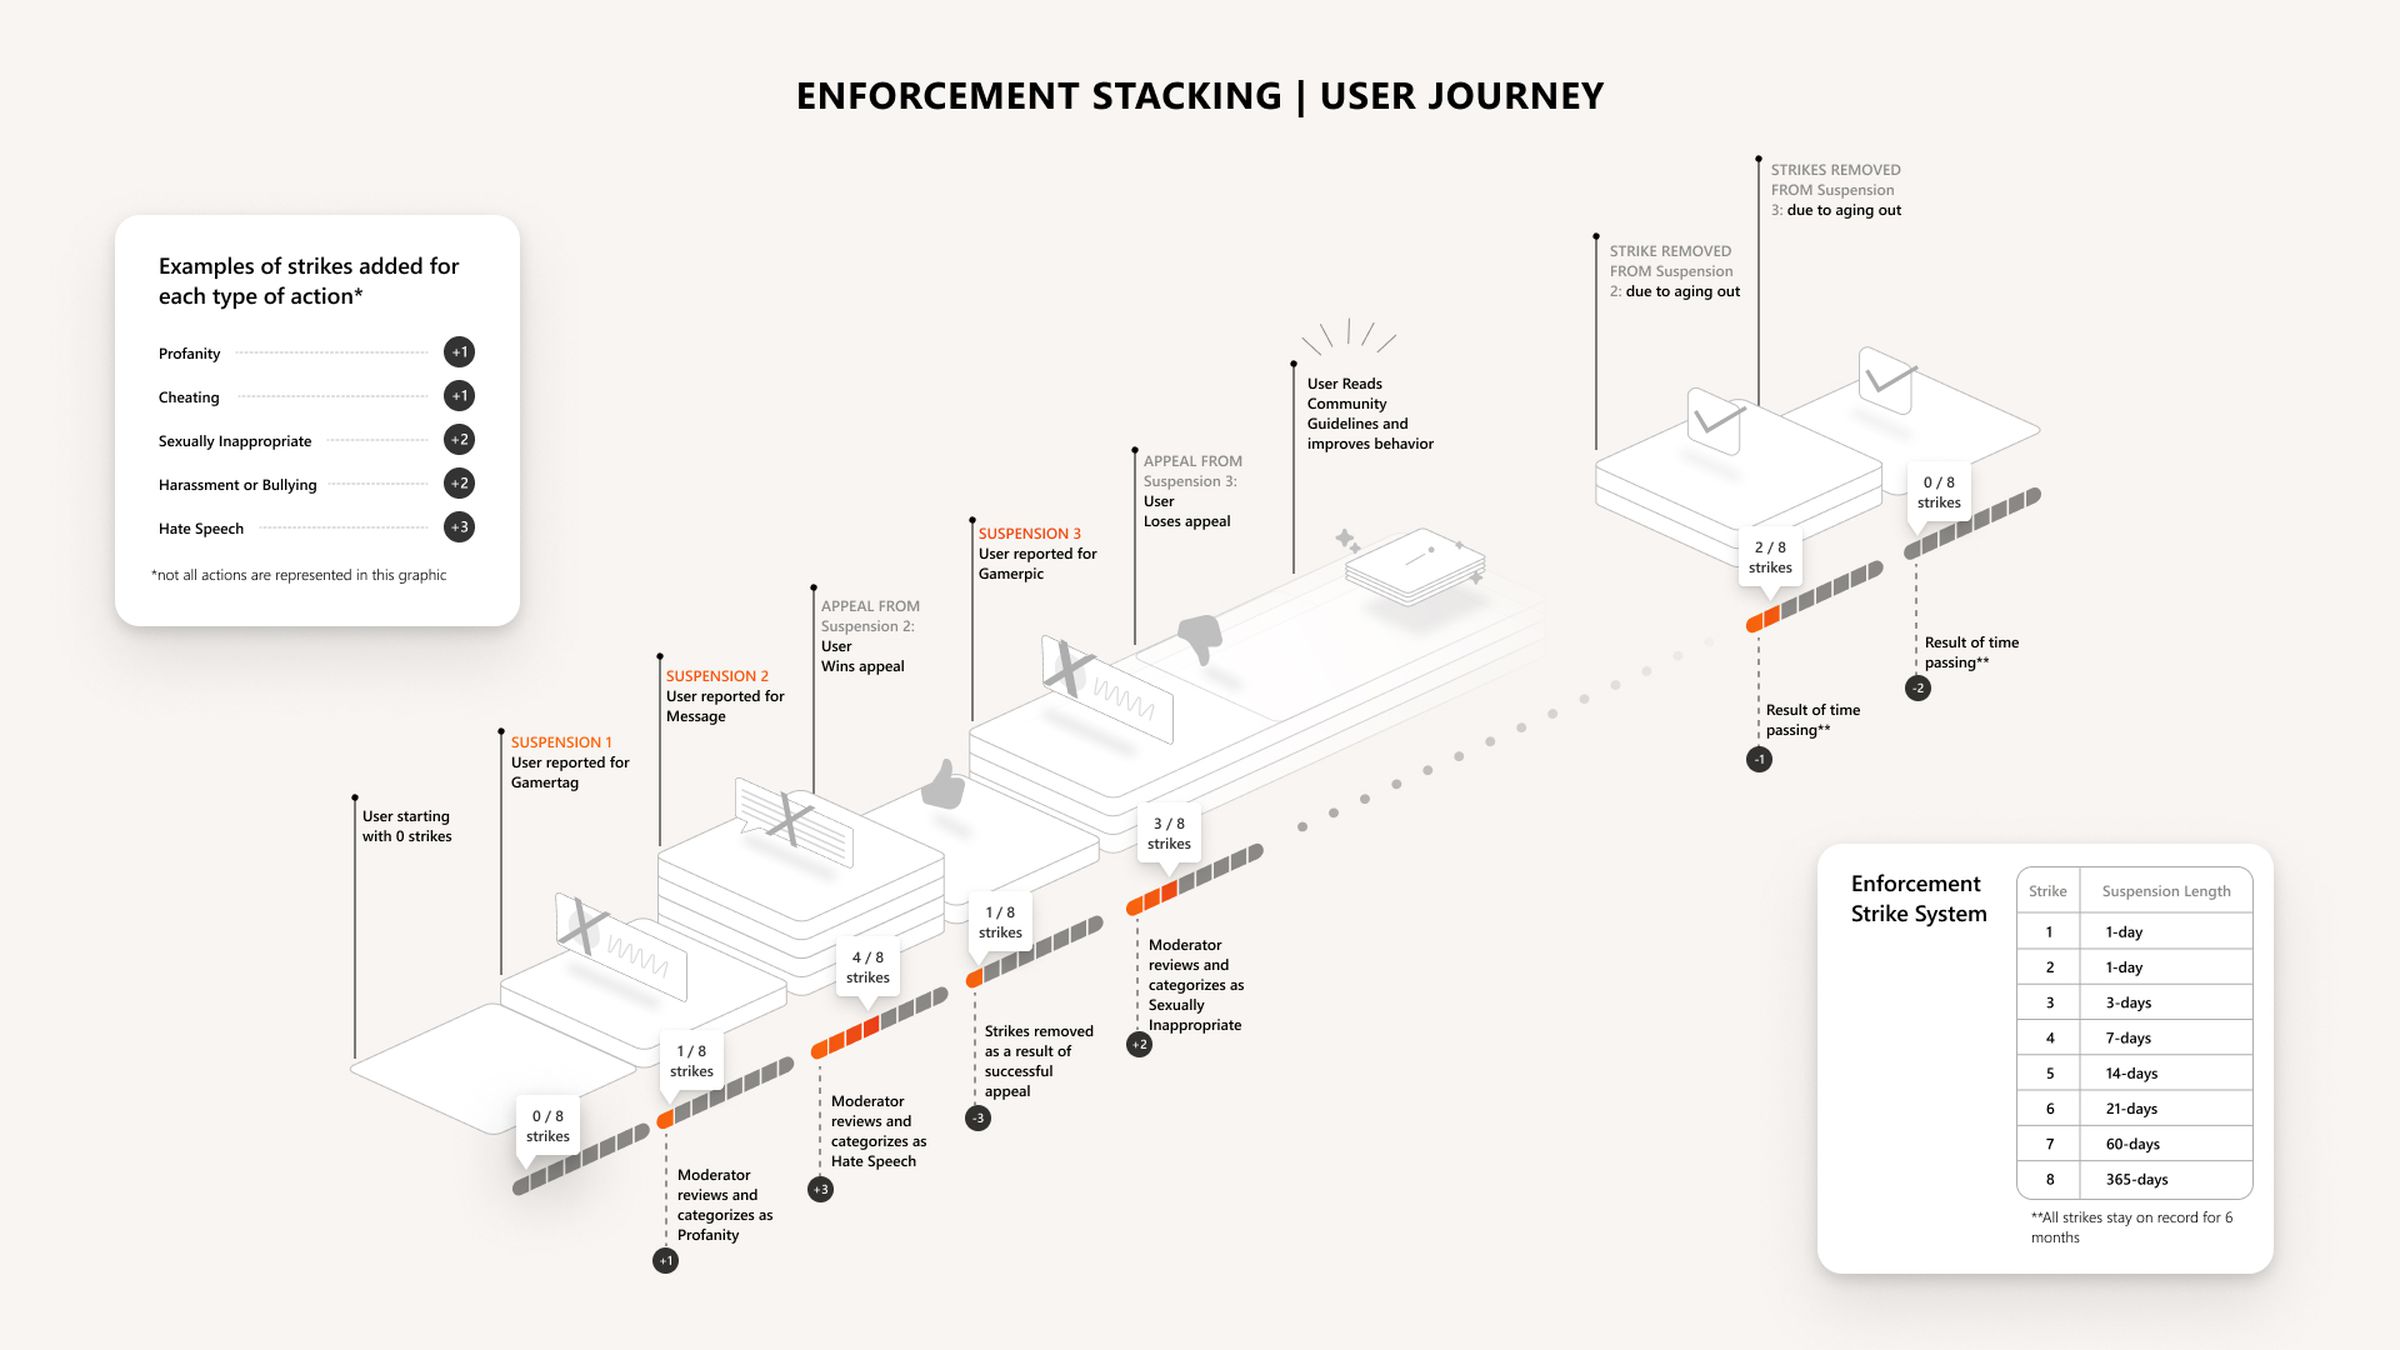 enforcement_stacking_user_journey_infographic_1920x1080.jpg